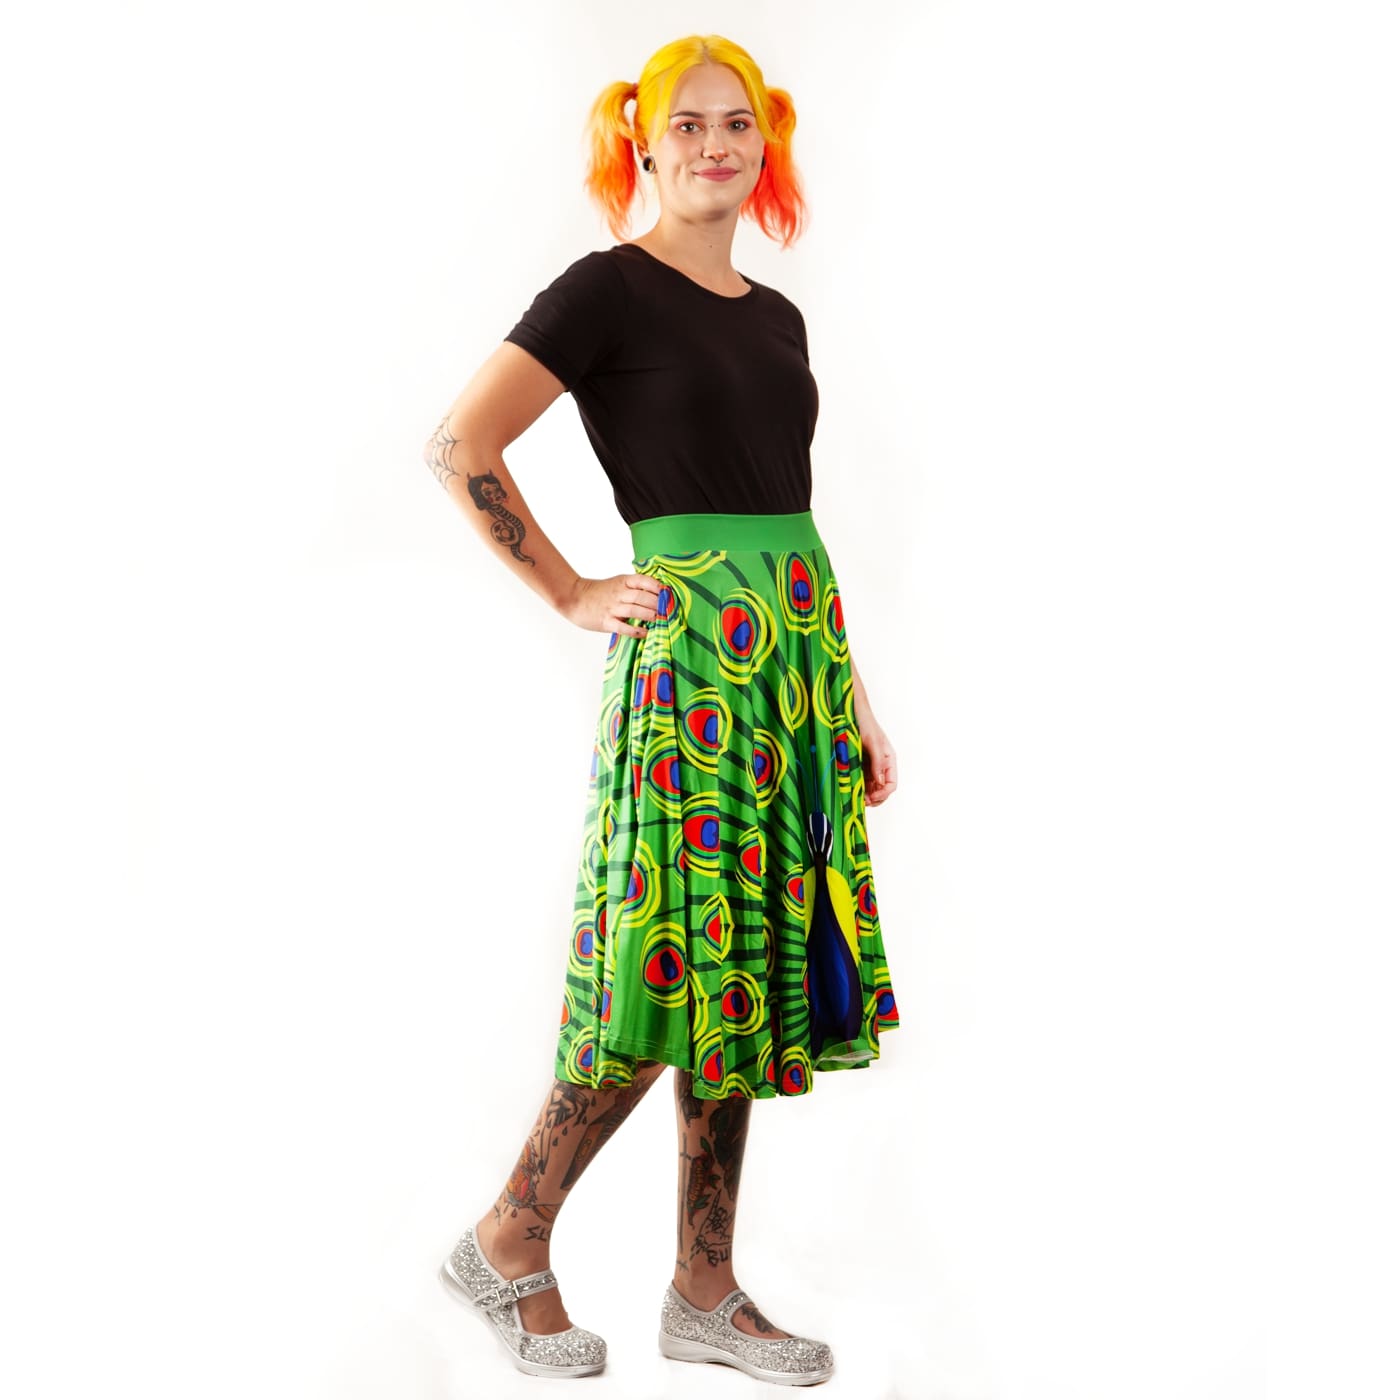 Olive Swishy Skirt by RainbowsAndFairies.com.au (Peacock - Peahen - Animal Print - Bird Print - Circle Skirt With Pockets - Mod Retro) - SKU: CL_SWISH_OLIVE_ORG - Pic-06